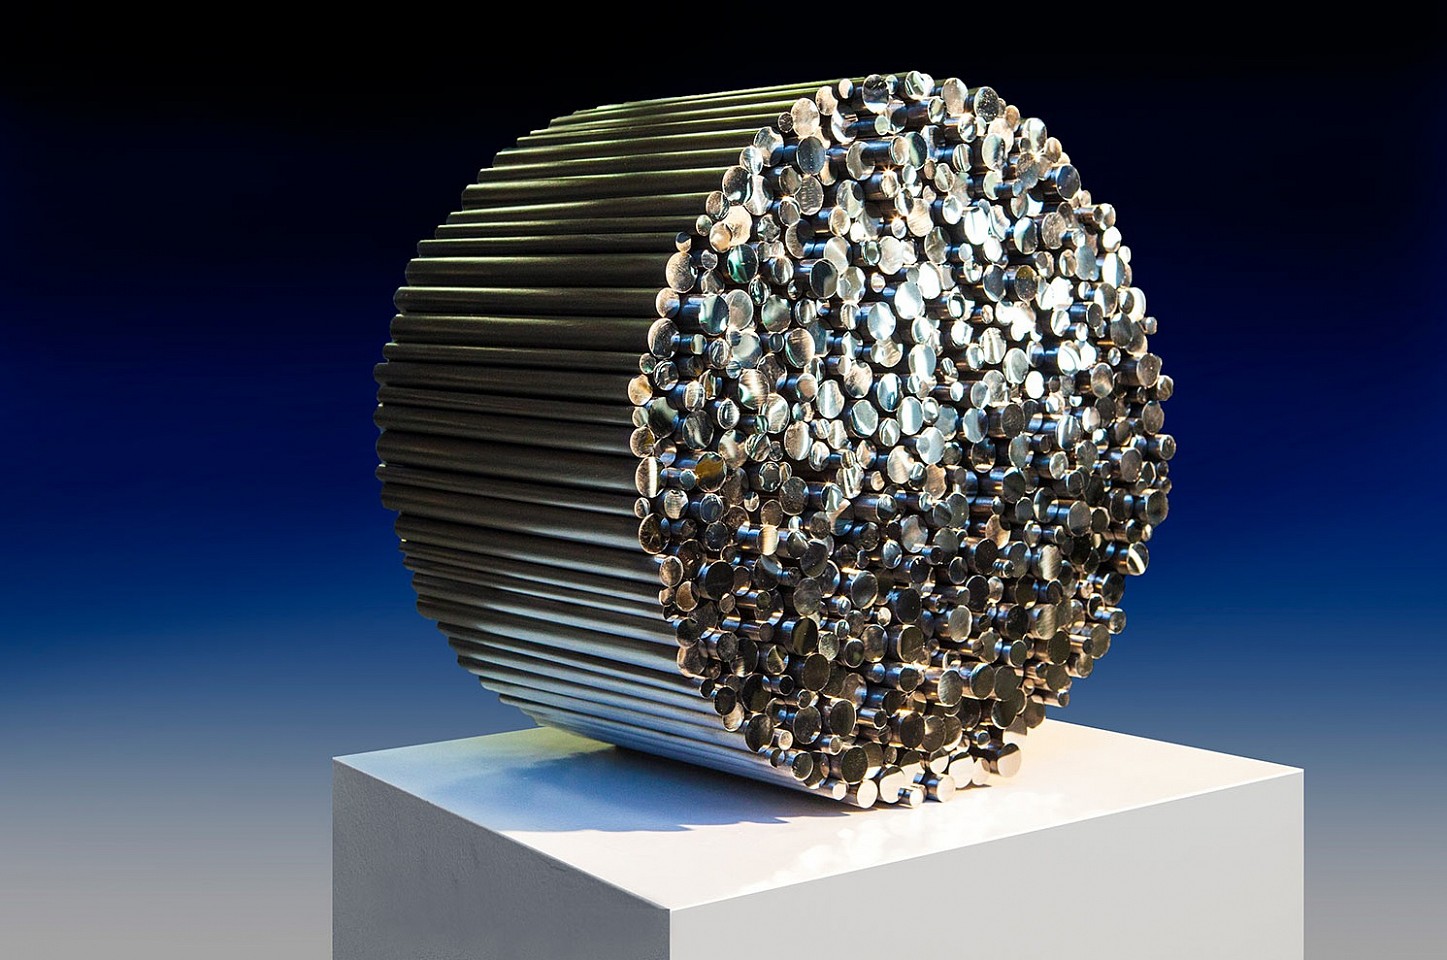 Jonathan Prince, Circular Stack, 2013
stainless steel
PRIN0003
Sold